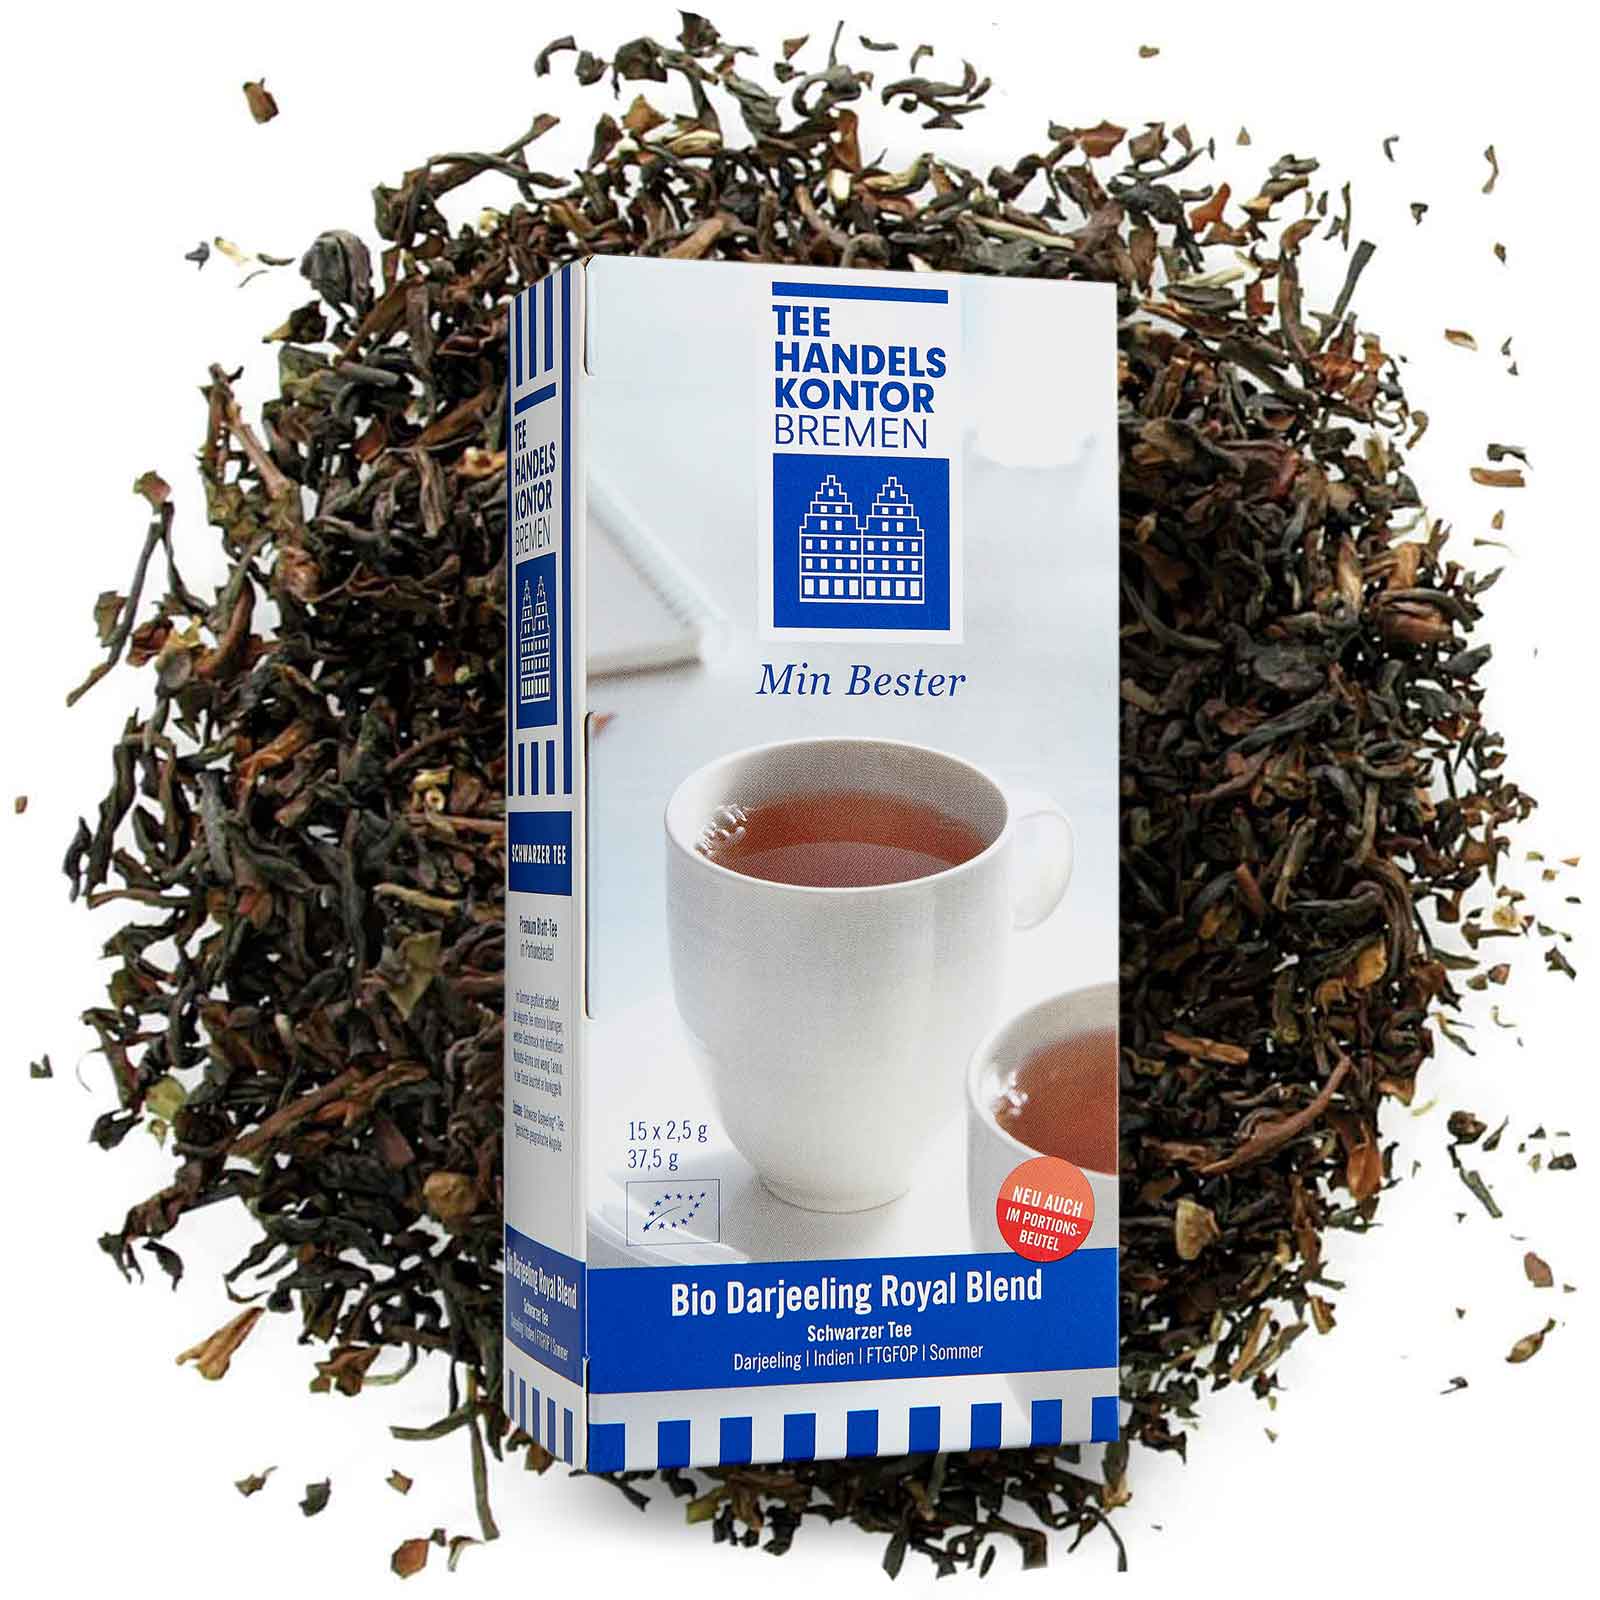 Min Bester® Bio Darjeeling Royal Blend von Tee Handels Kontor Bremen